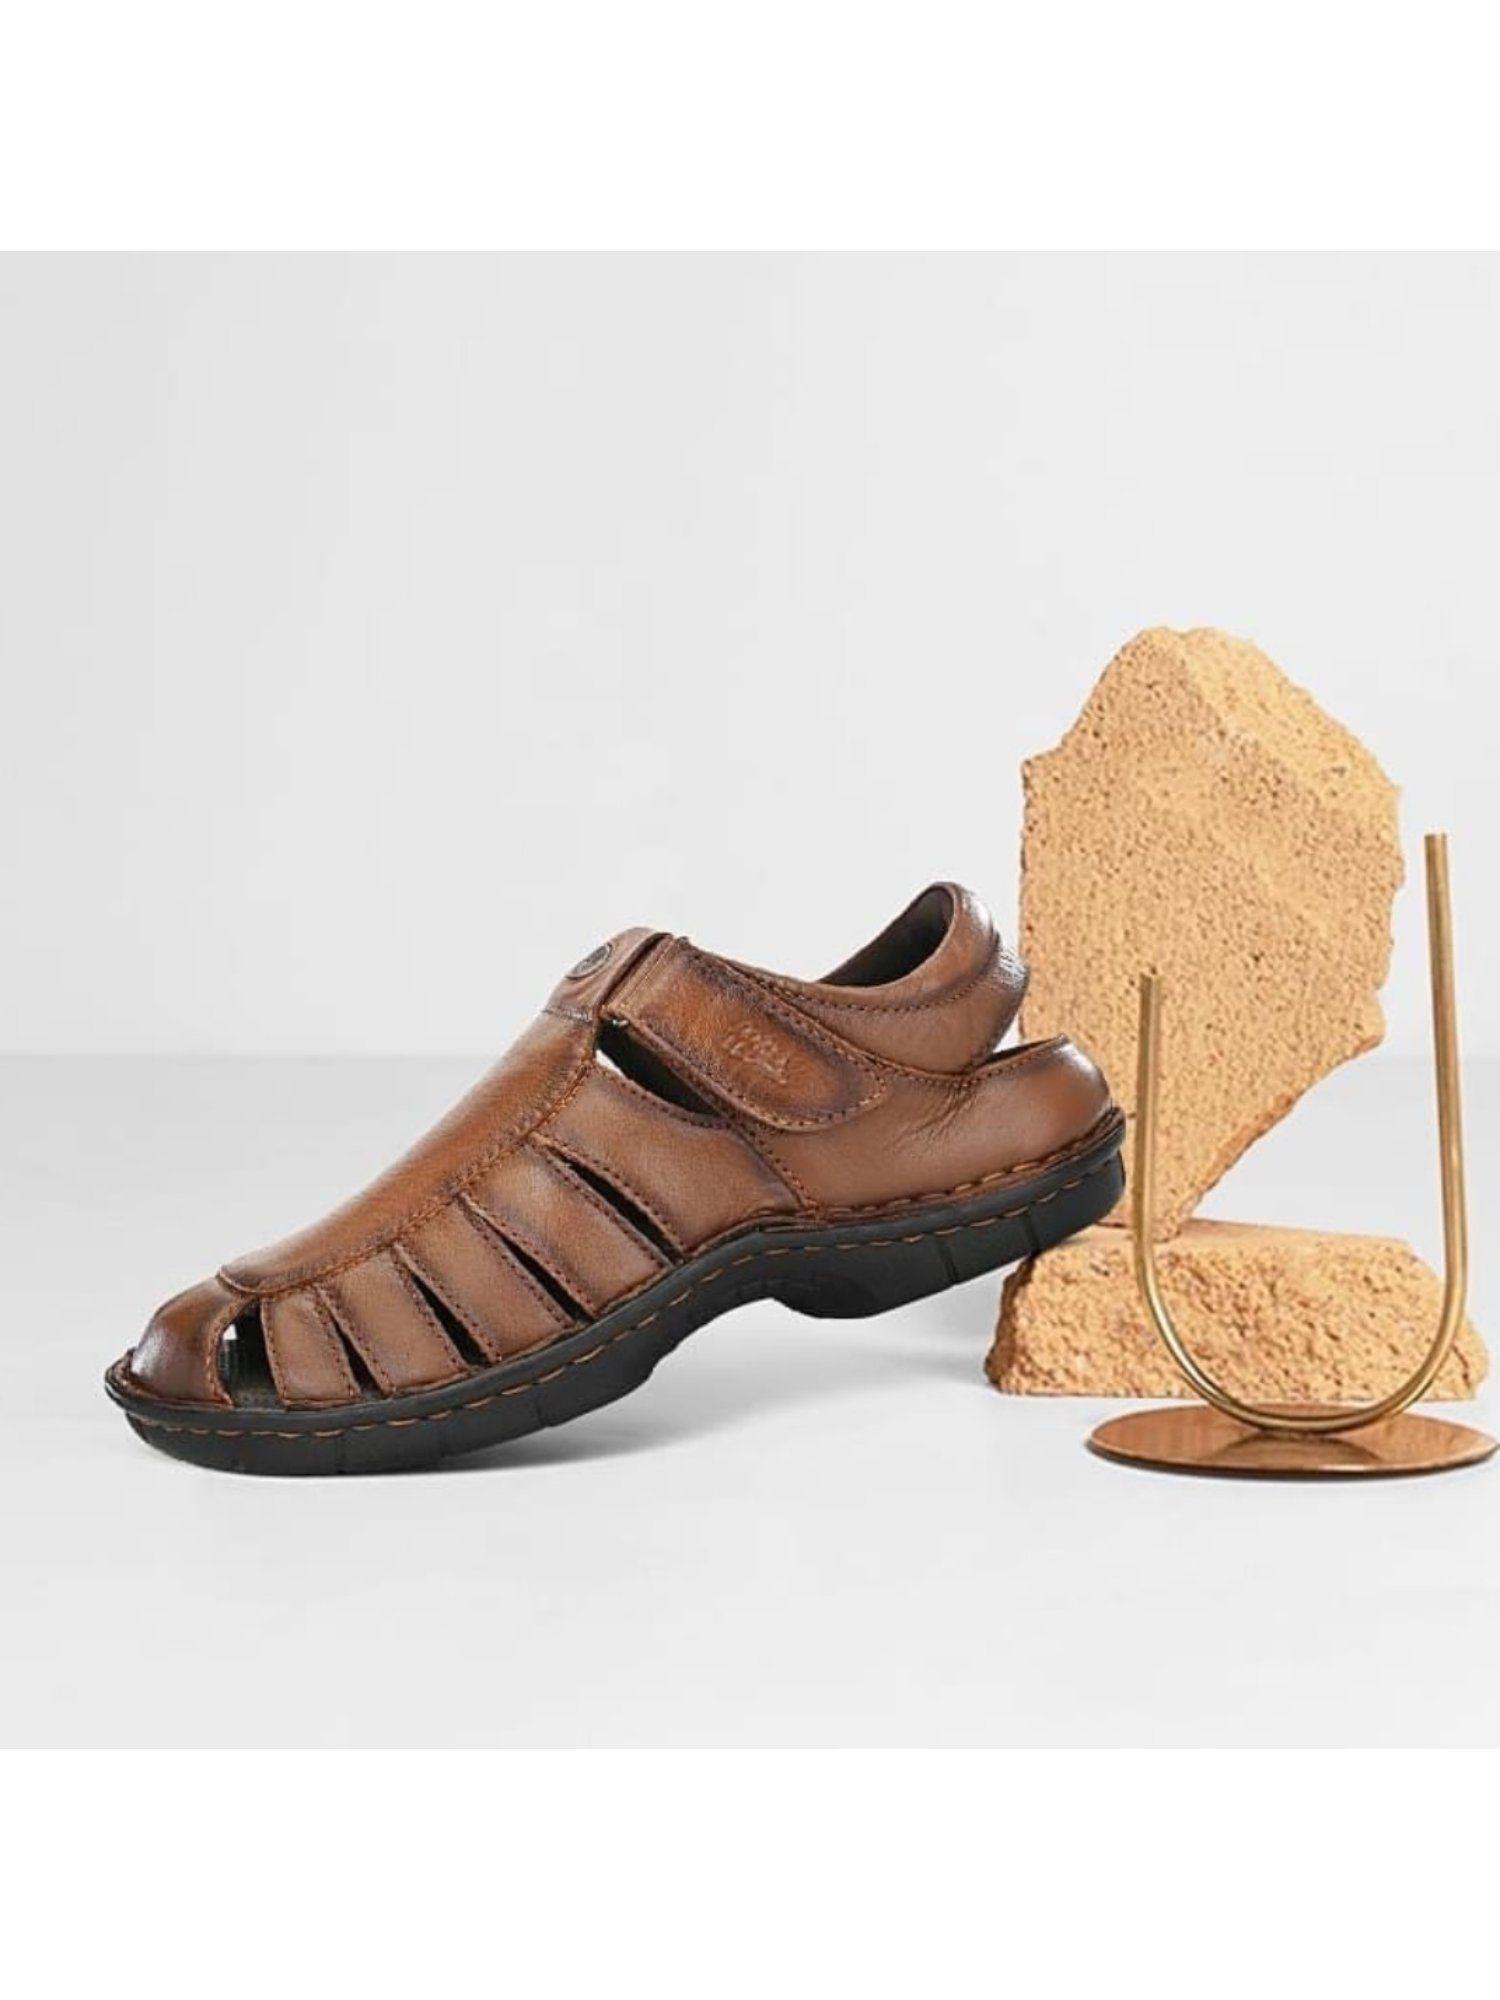 men's-tan-leather-comfort-sandals-with-velcro-closure